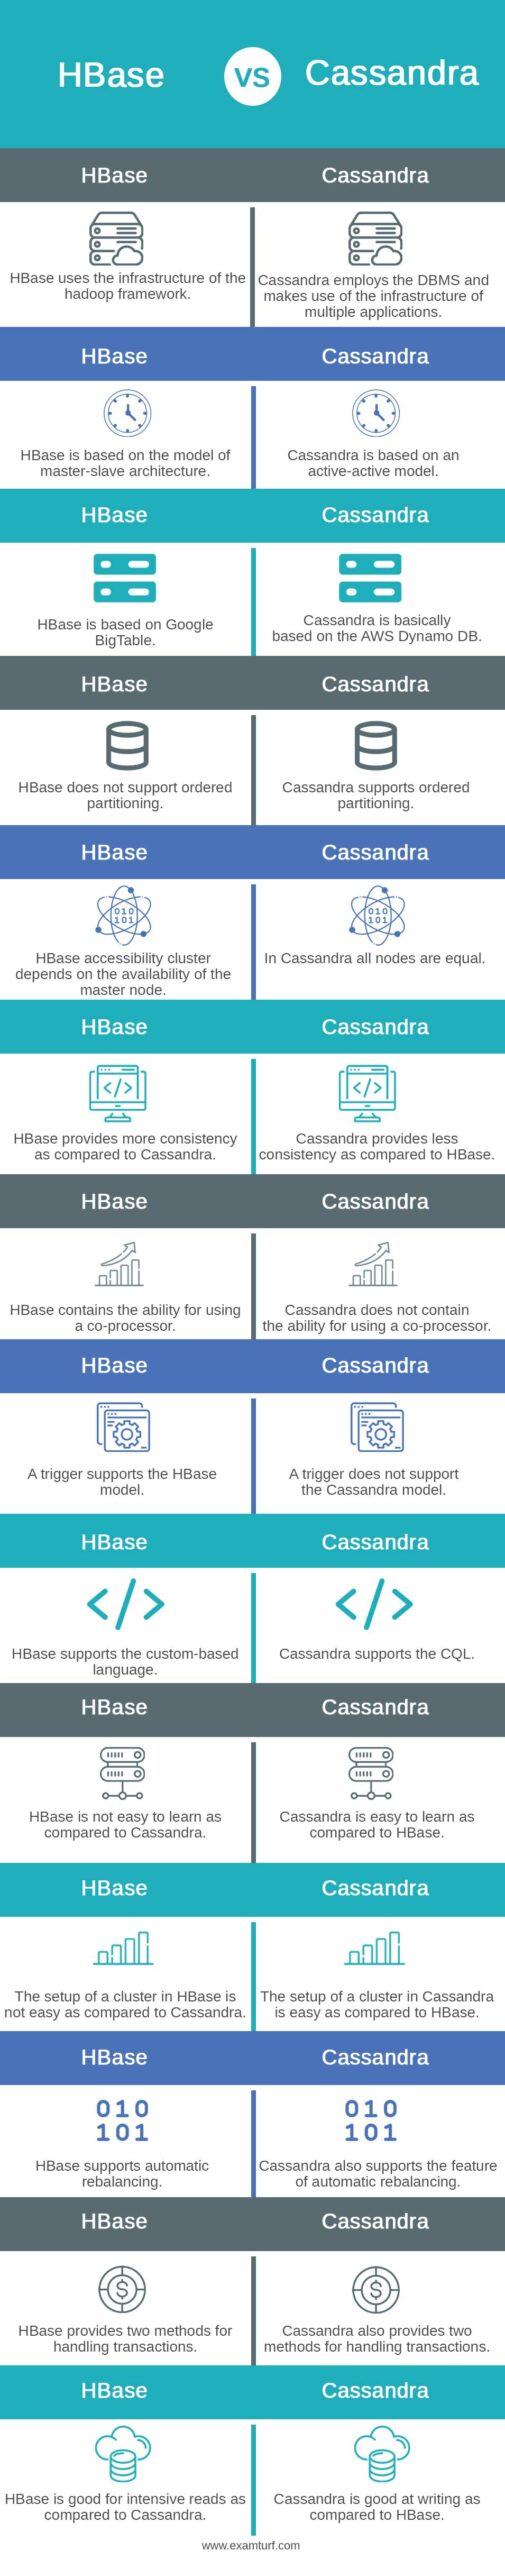 HBase-vs-Cassandra-info